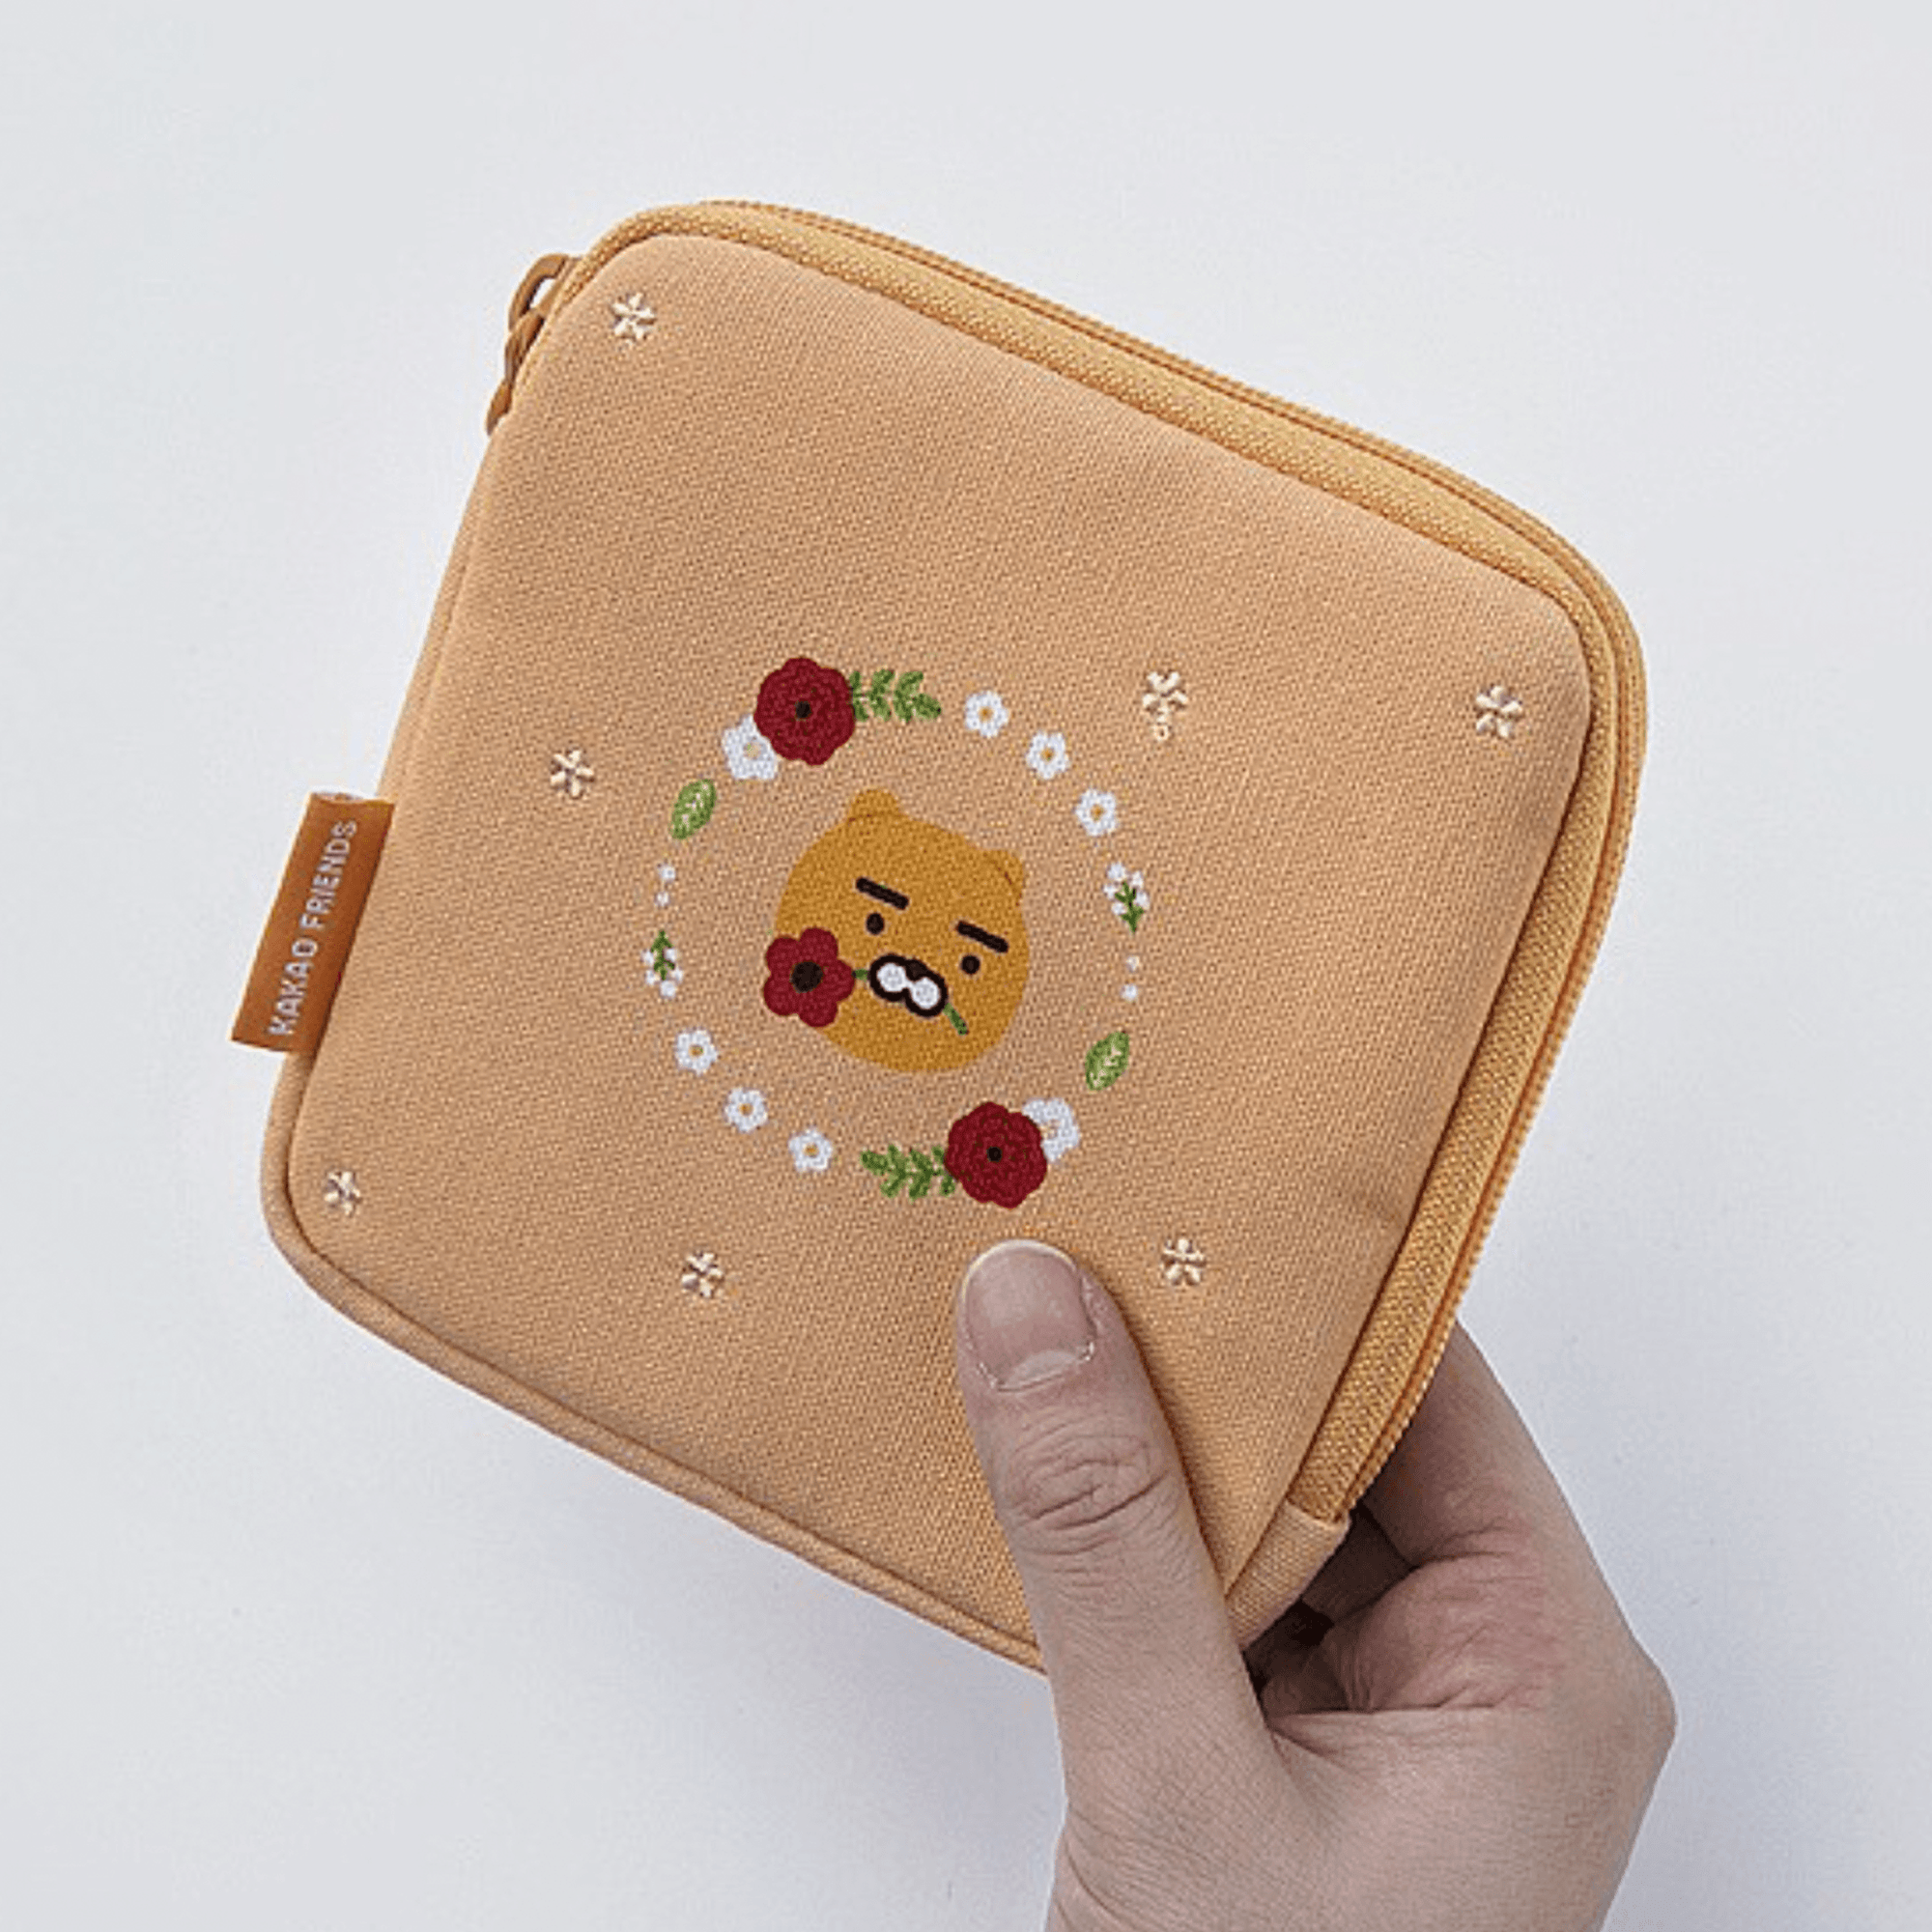 KAKAO FRIENDS Slim Small Mini Square Pouch Coin Wallet Purse Bag - SkoopMarket